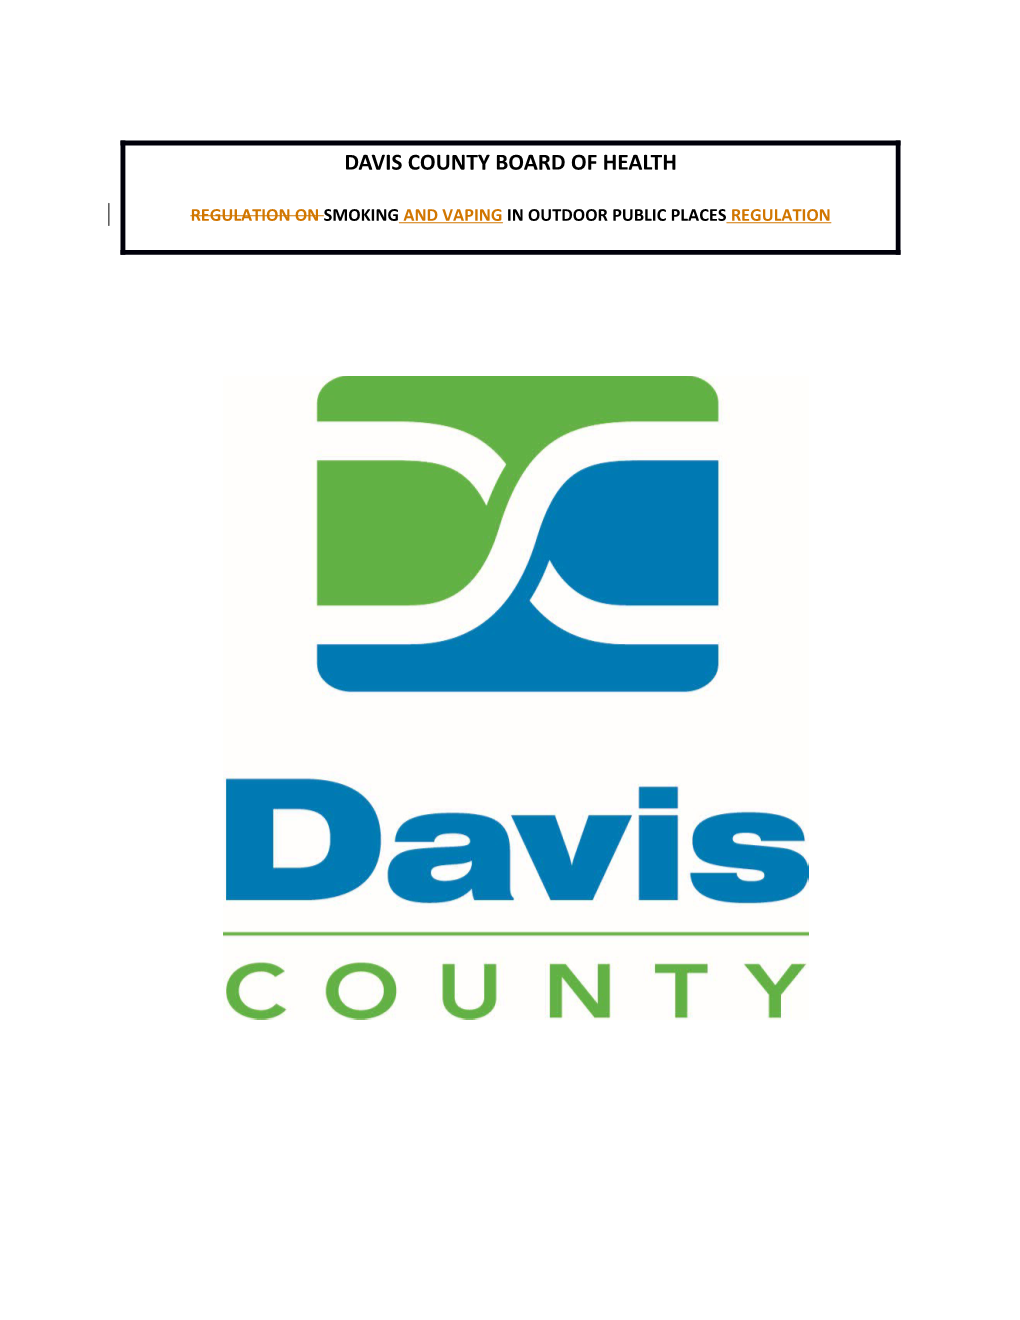 Davis County Board of Health